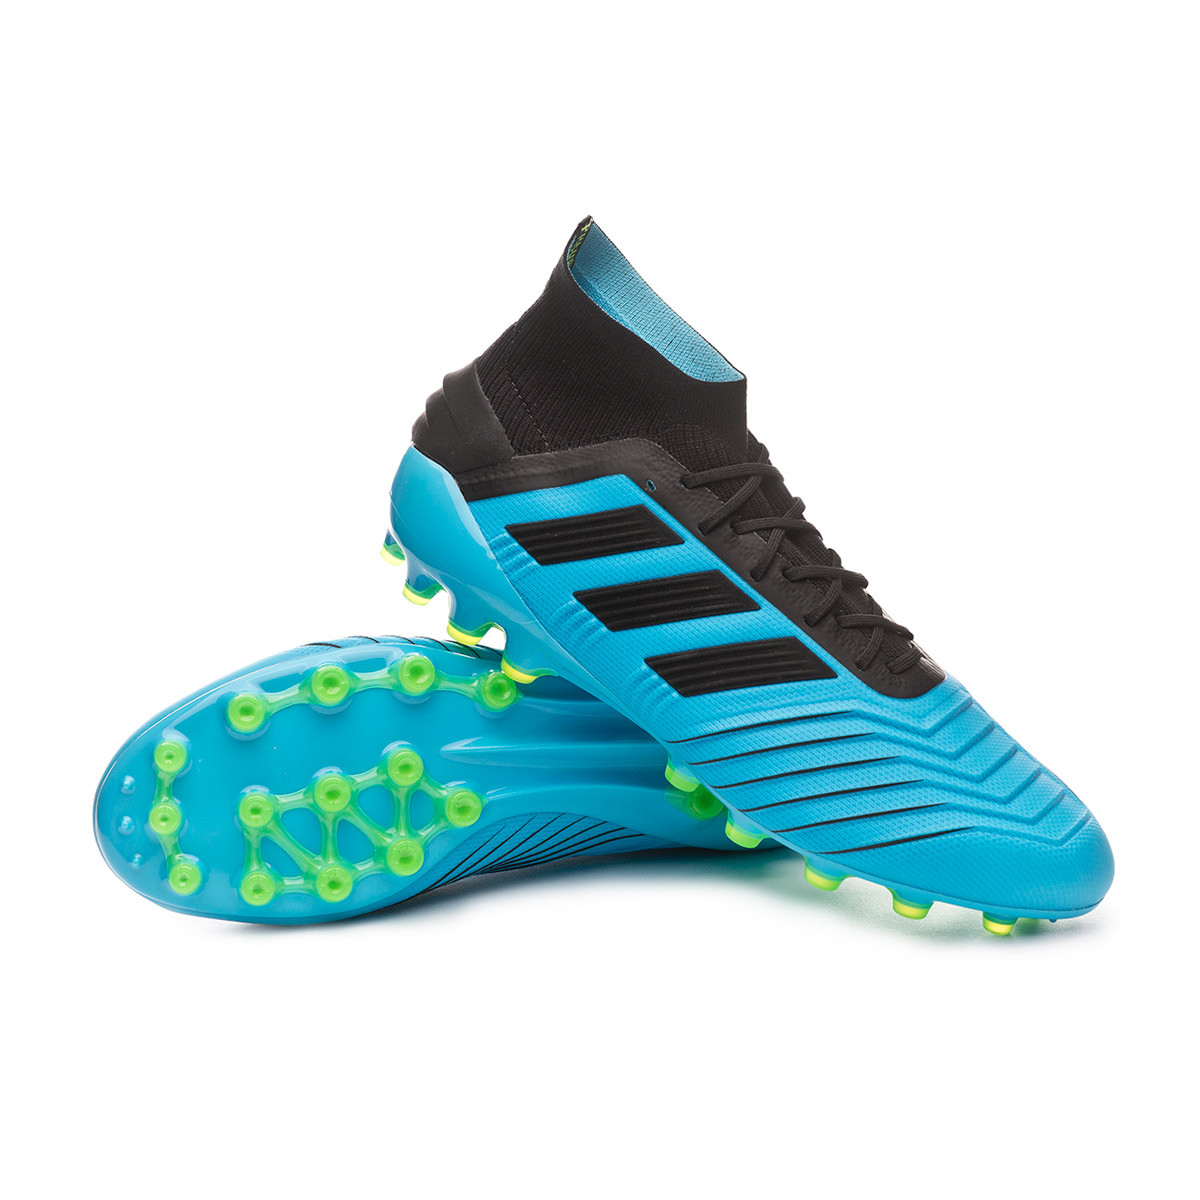 Football Boots adidas Predator 19.1 AG Bright cyan-Core black-Solar yellow  - Football store Fútbol Emotion